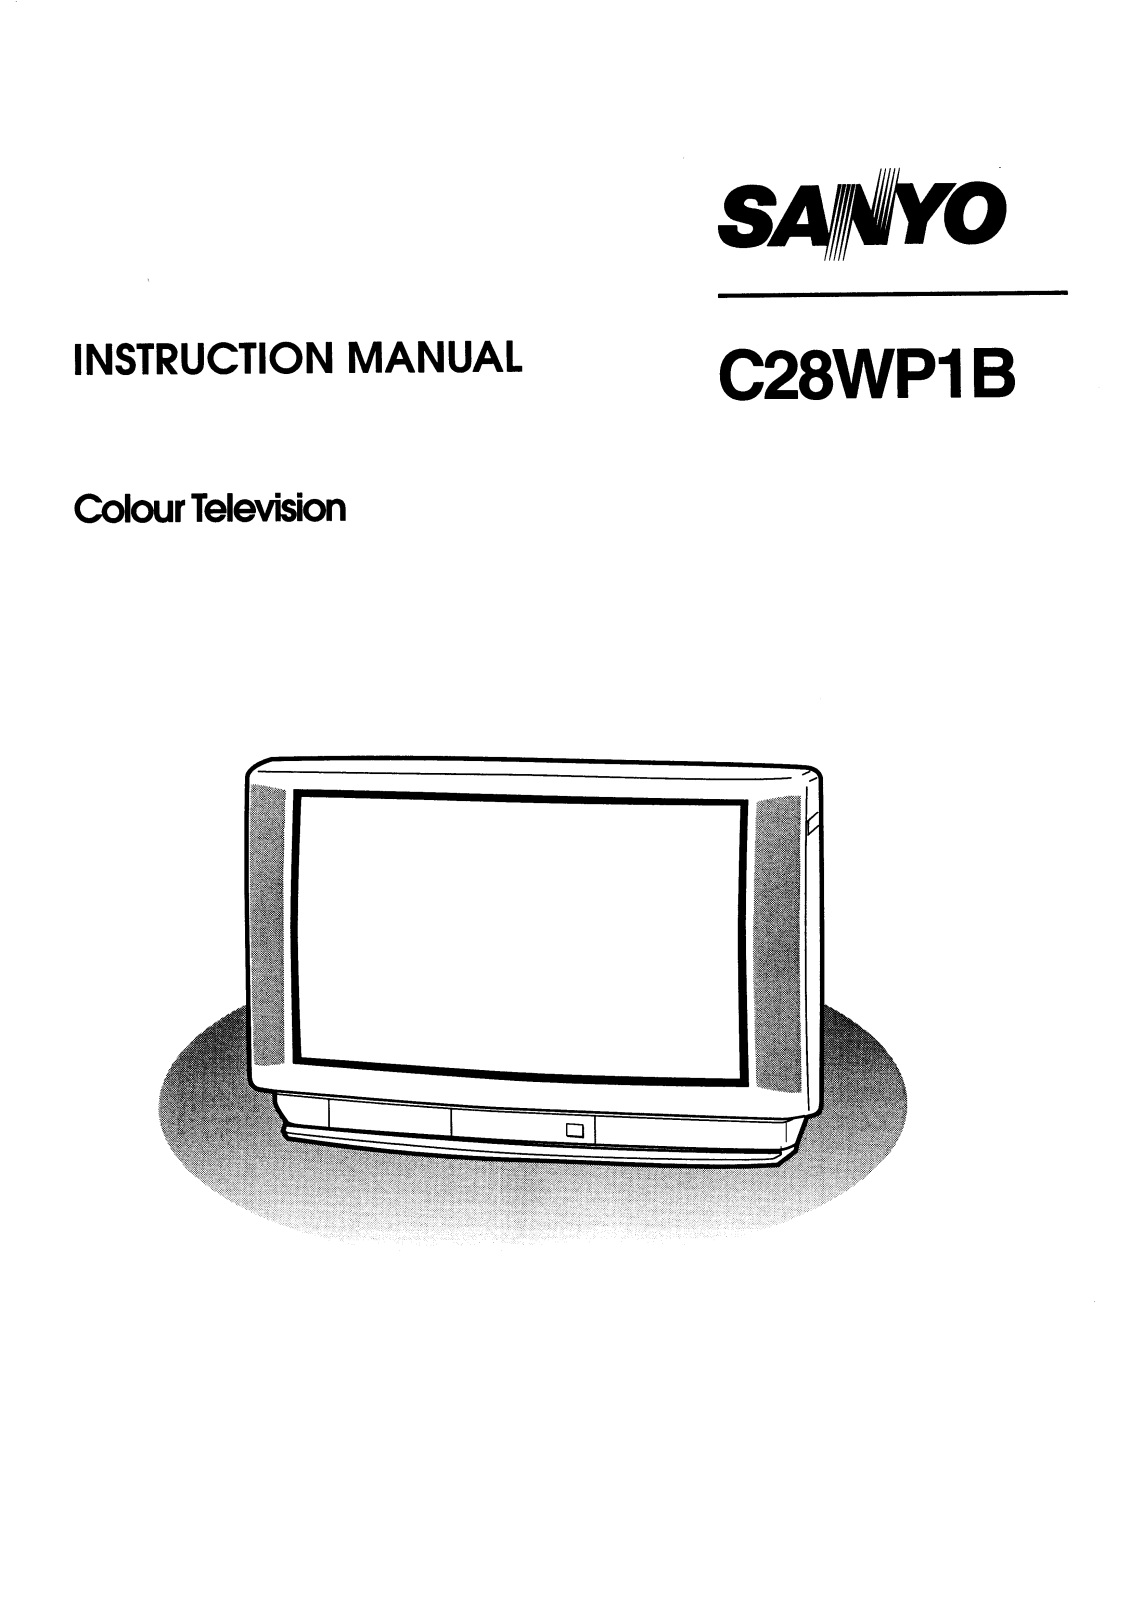 Sanyo C28WP1B Instruction Manual